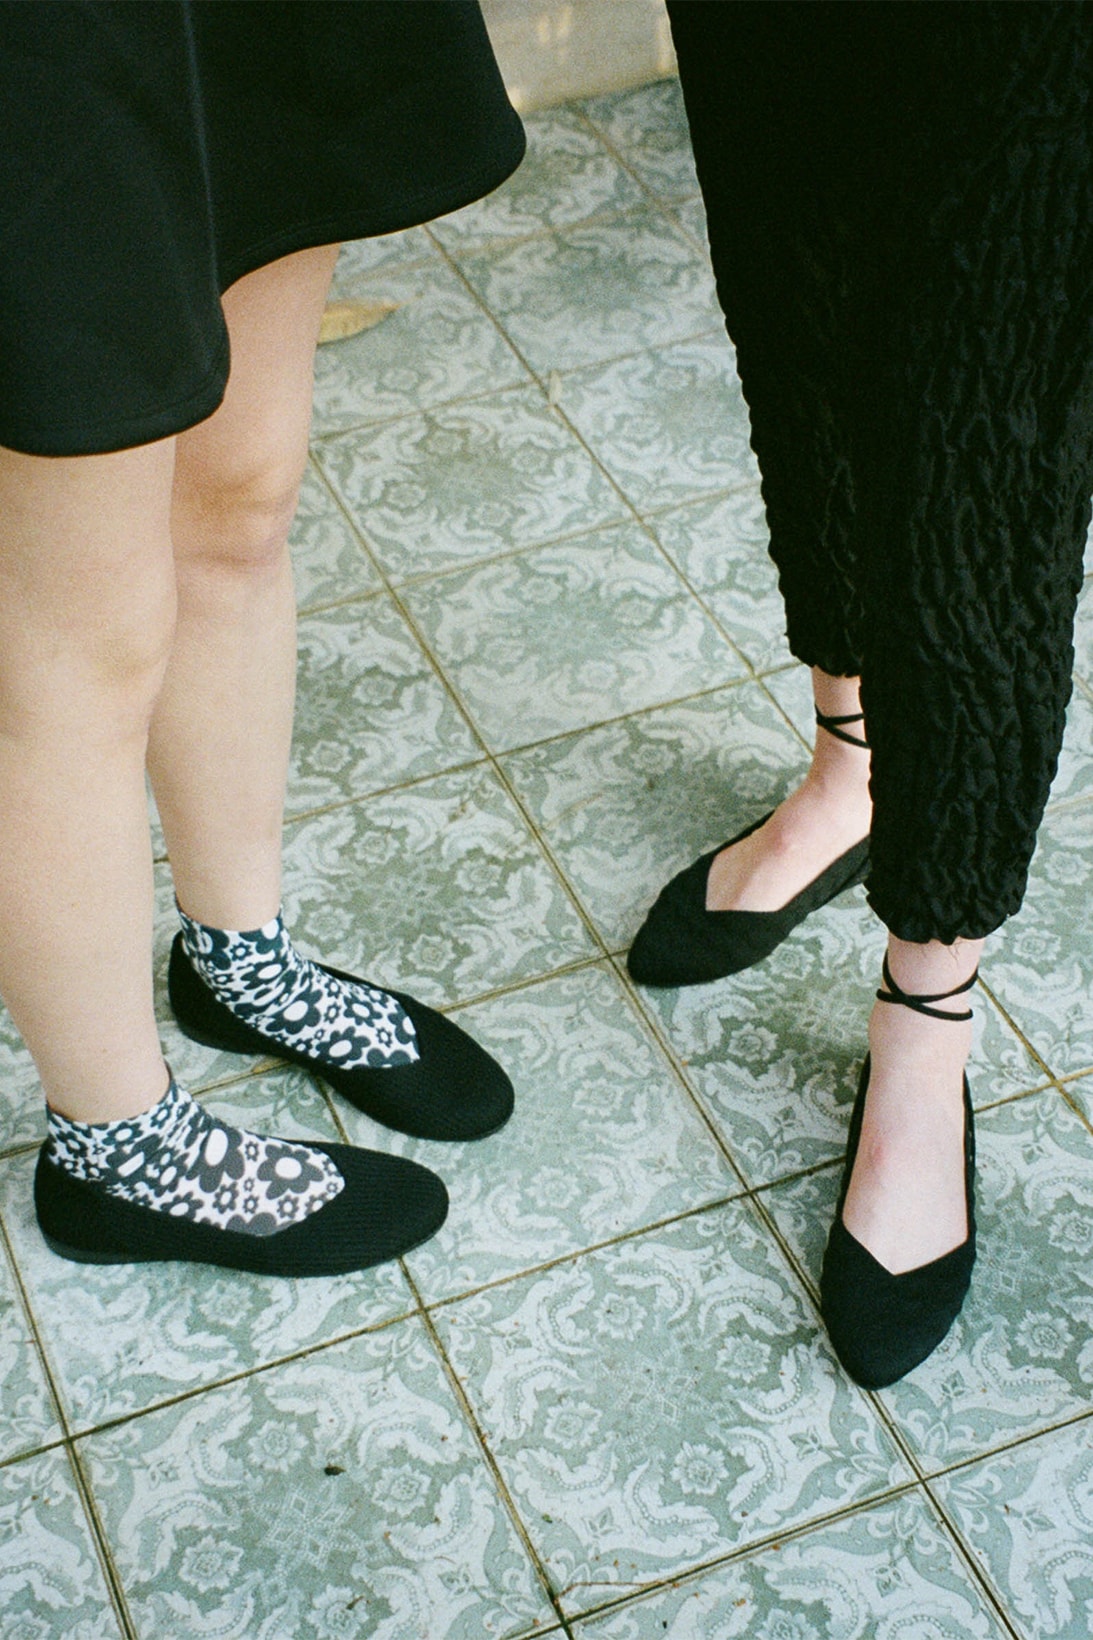 Inooknit "Desert" Collection Flats Shoes Lookbook Black Details Floral